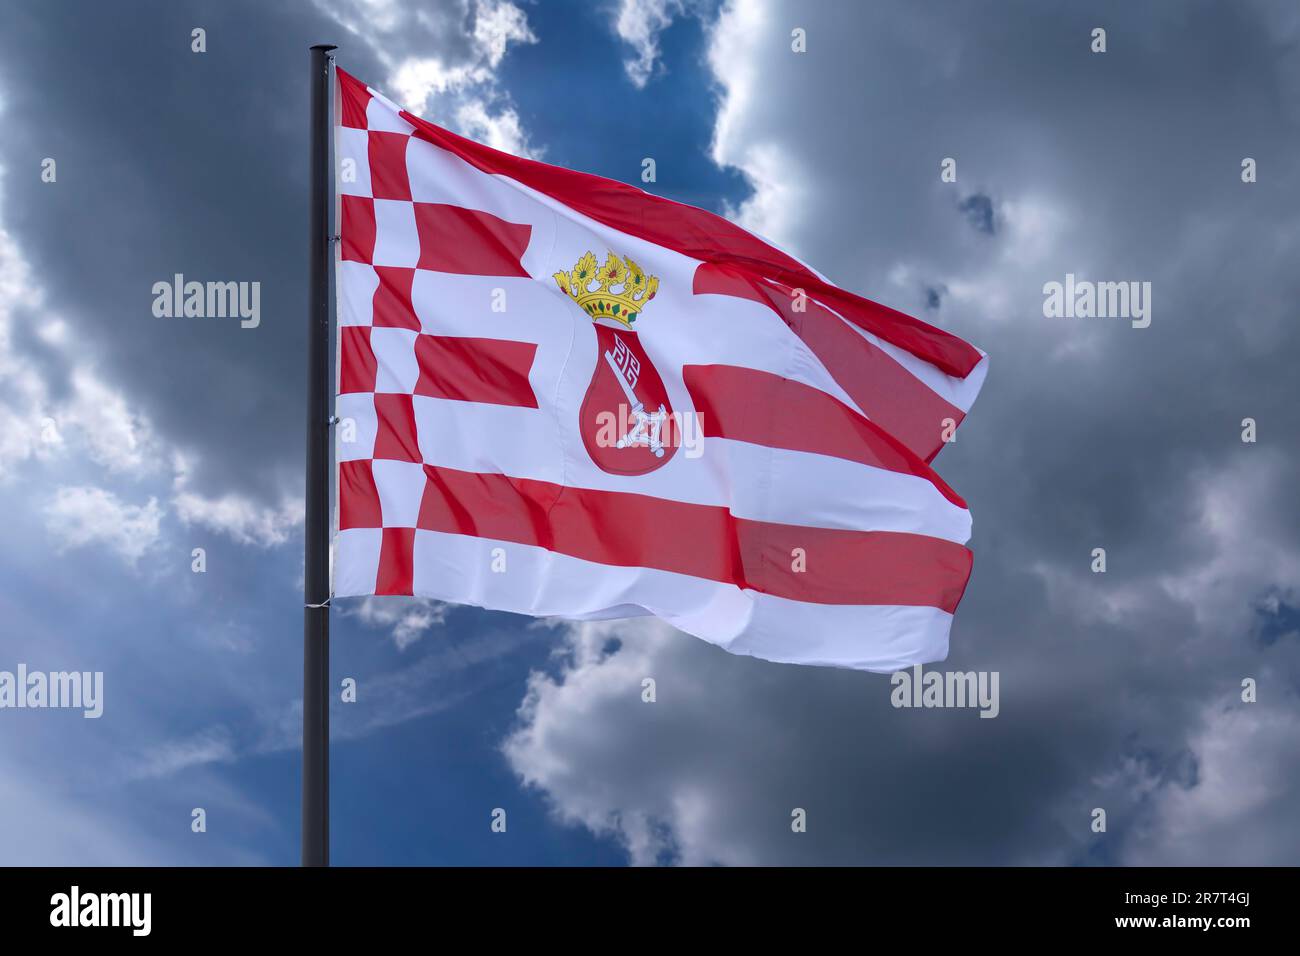 Sventolando la bandiera dell'Assia, cielo nuvoloso, Coblenza, Renania-Palatinato, Germania Foto Stock